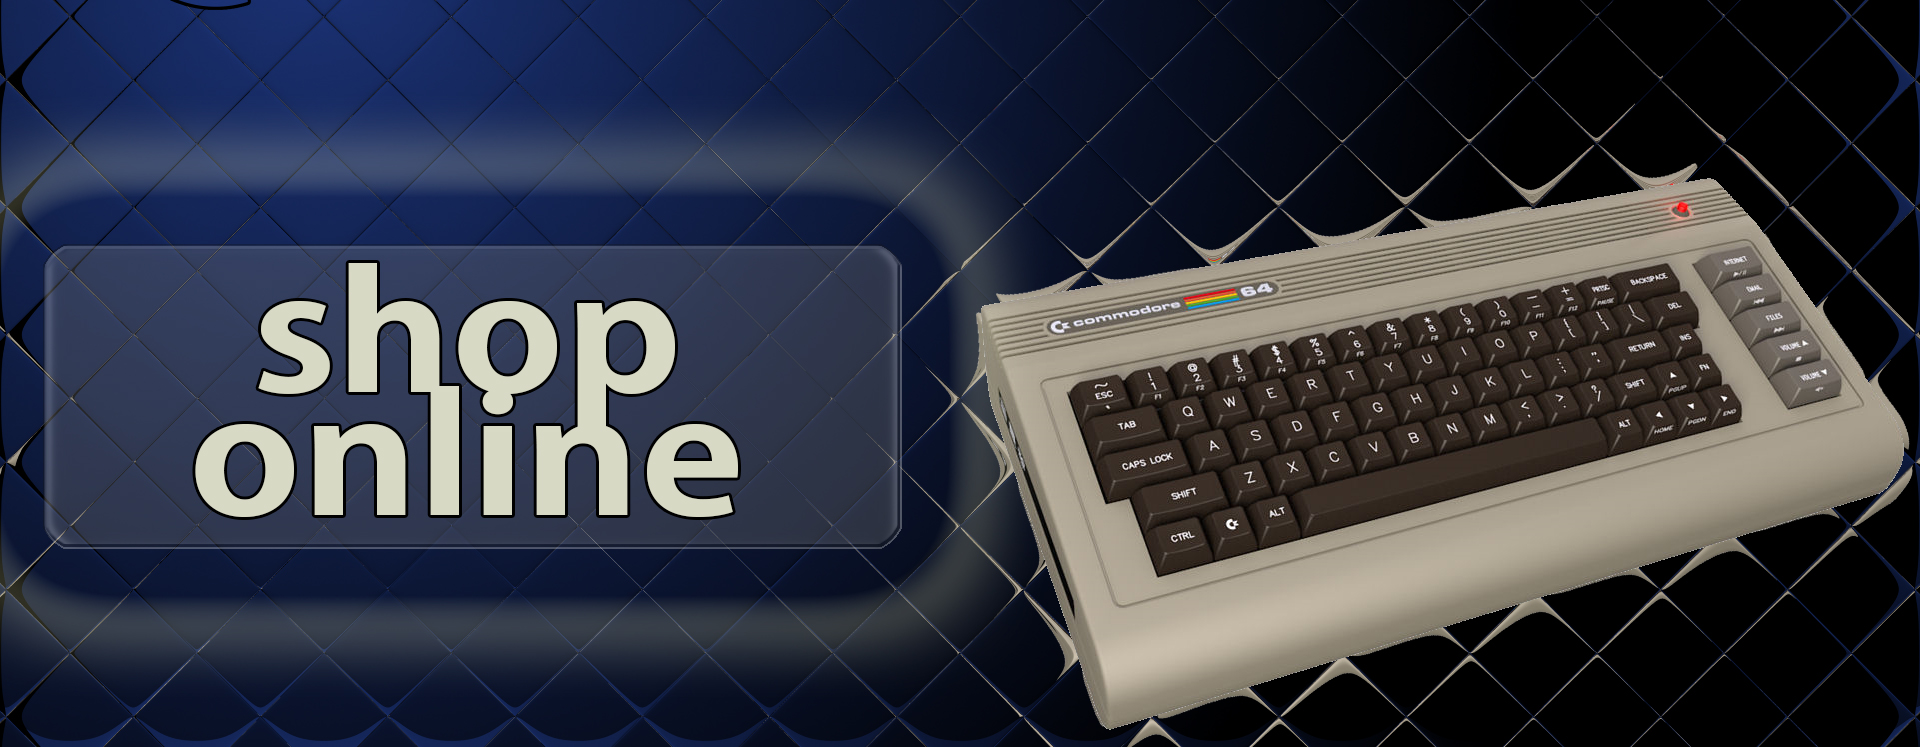 Commodore Shop Online